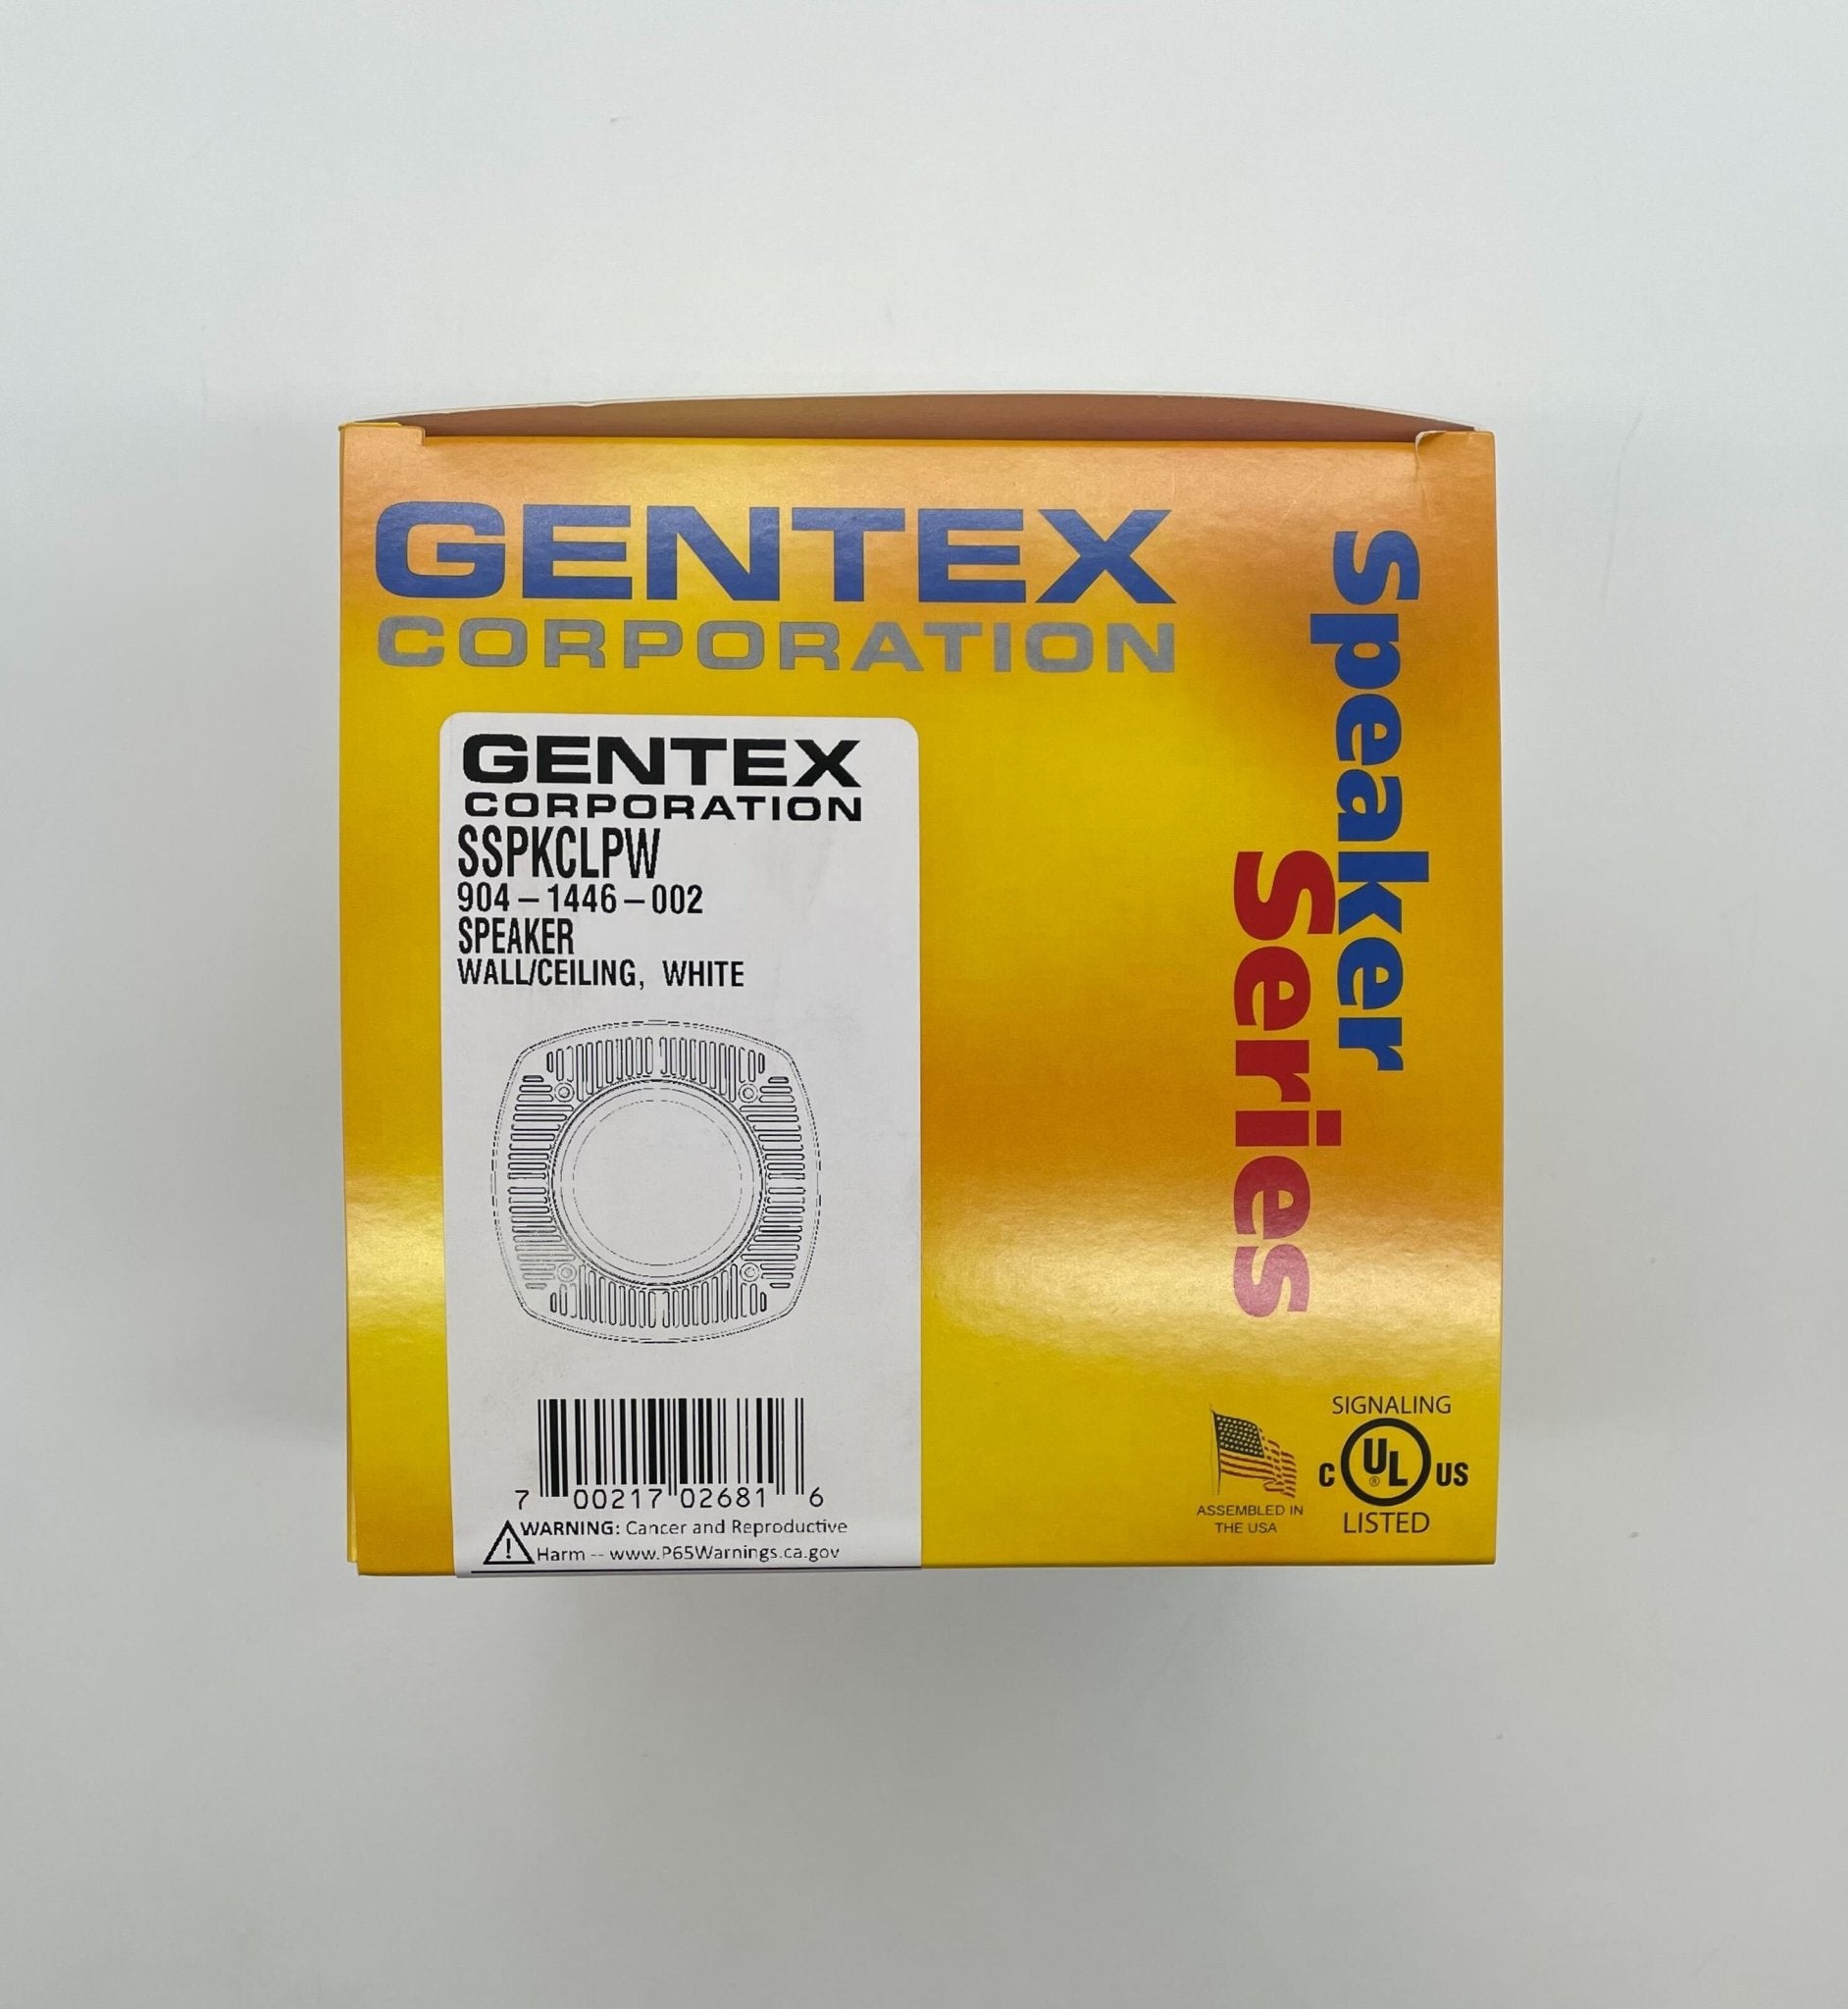 Gentex SSPKCLPW - The Fire Alarm Supplier